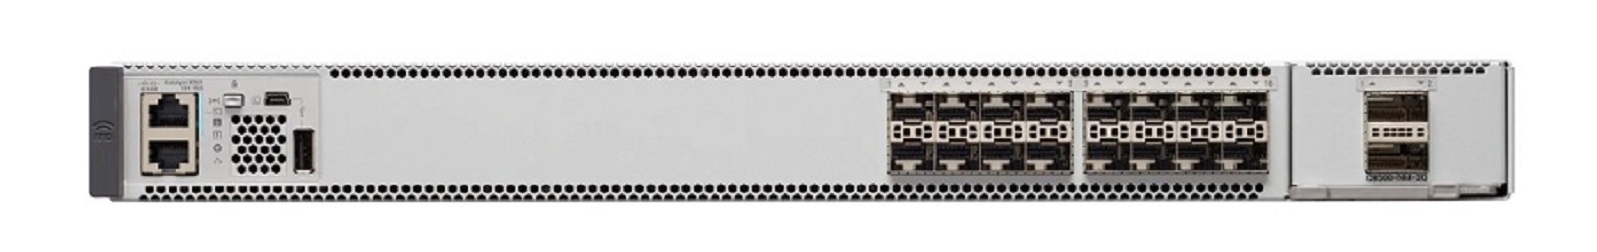 Cisco C9500-16X-2Q-A Catalyst 9500 16-port 10G switch, 2 x 40GE Network Module, NW Adv. License